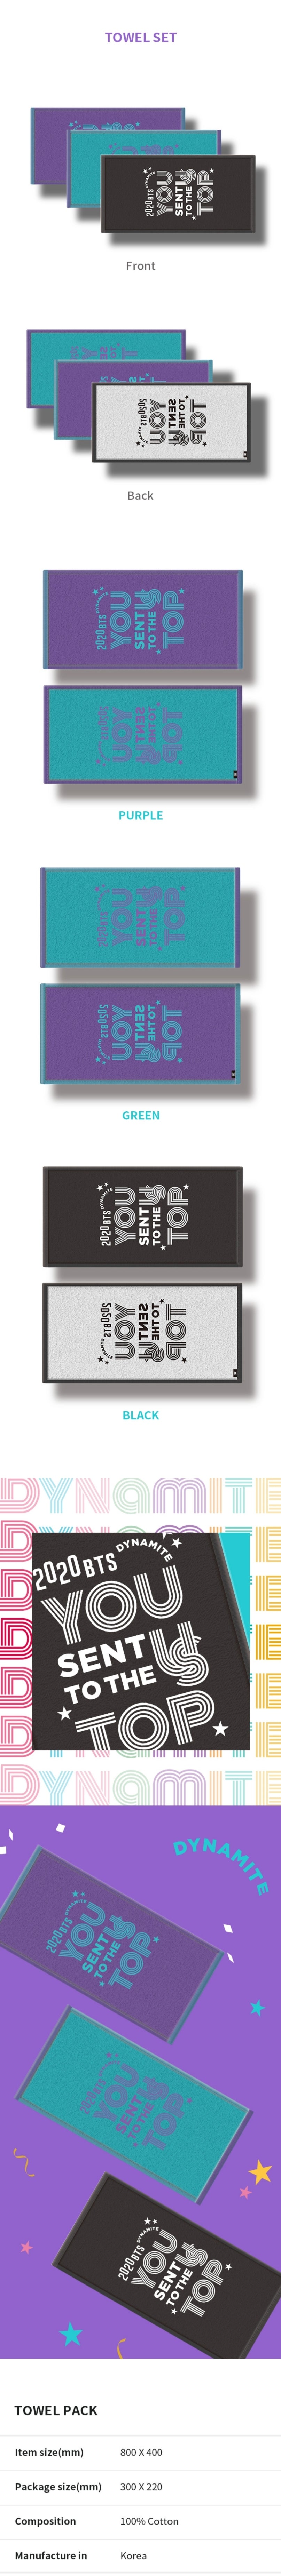 Celebración de la dinamita BTS Merchandise Ofricial - Toallel Pack 01